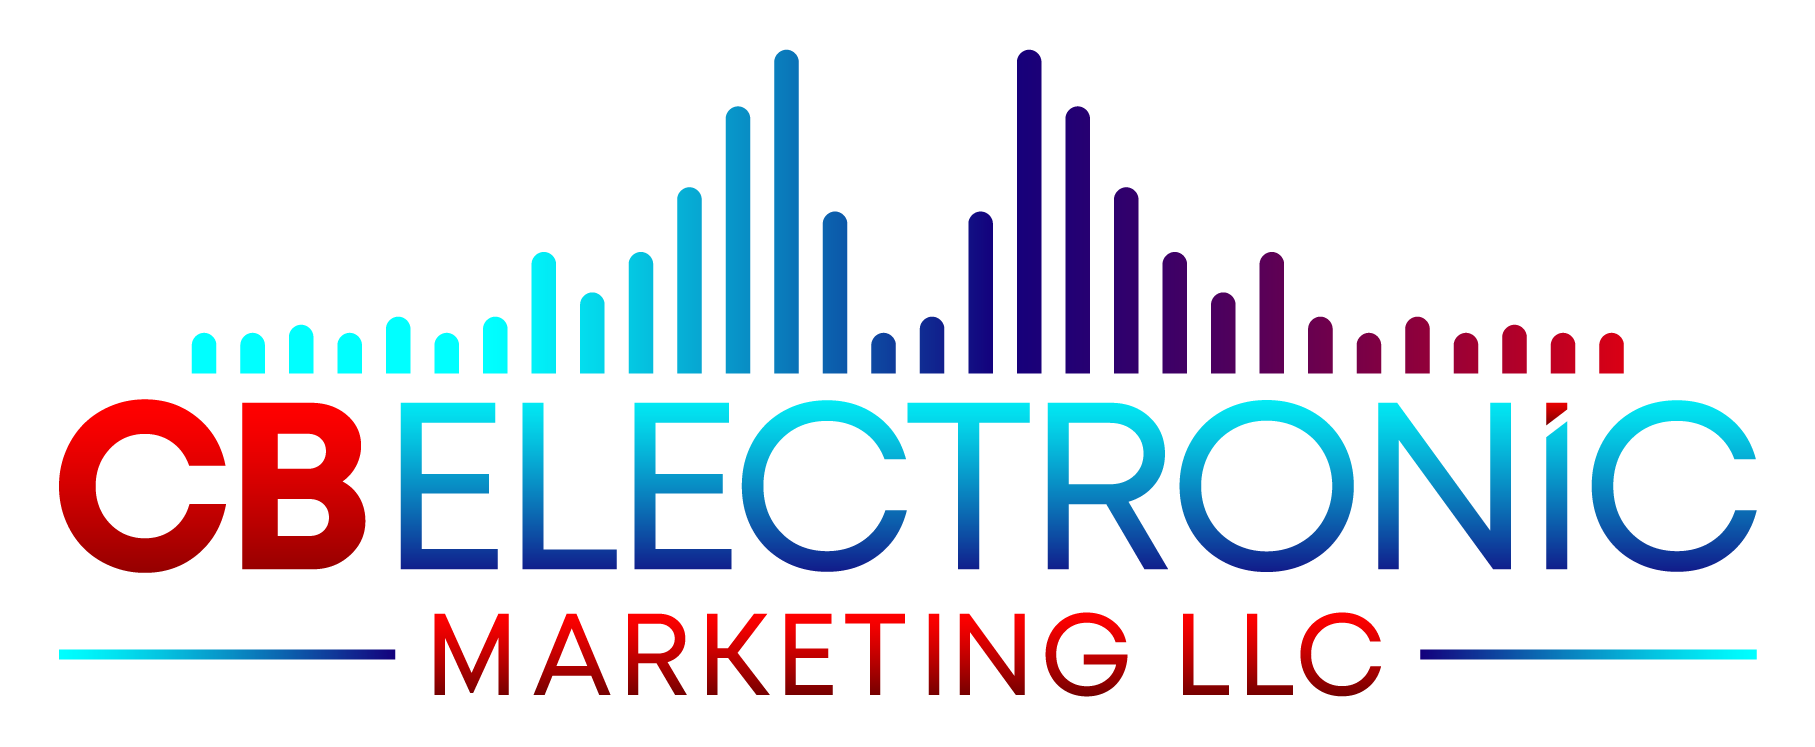 CB Electronic Marketing LLC